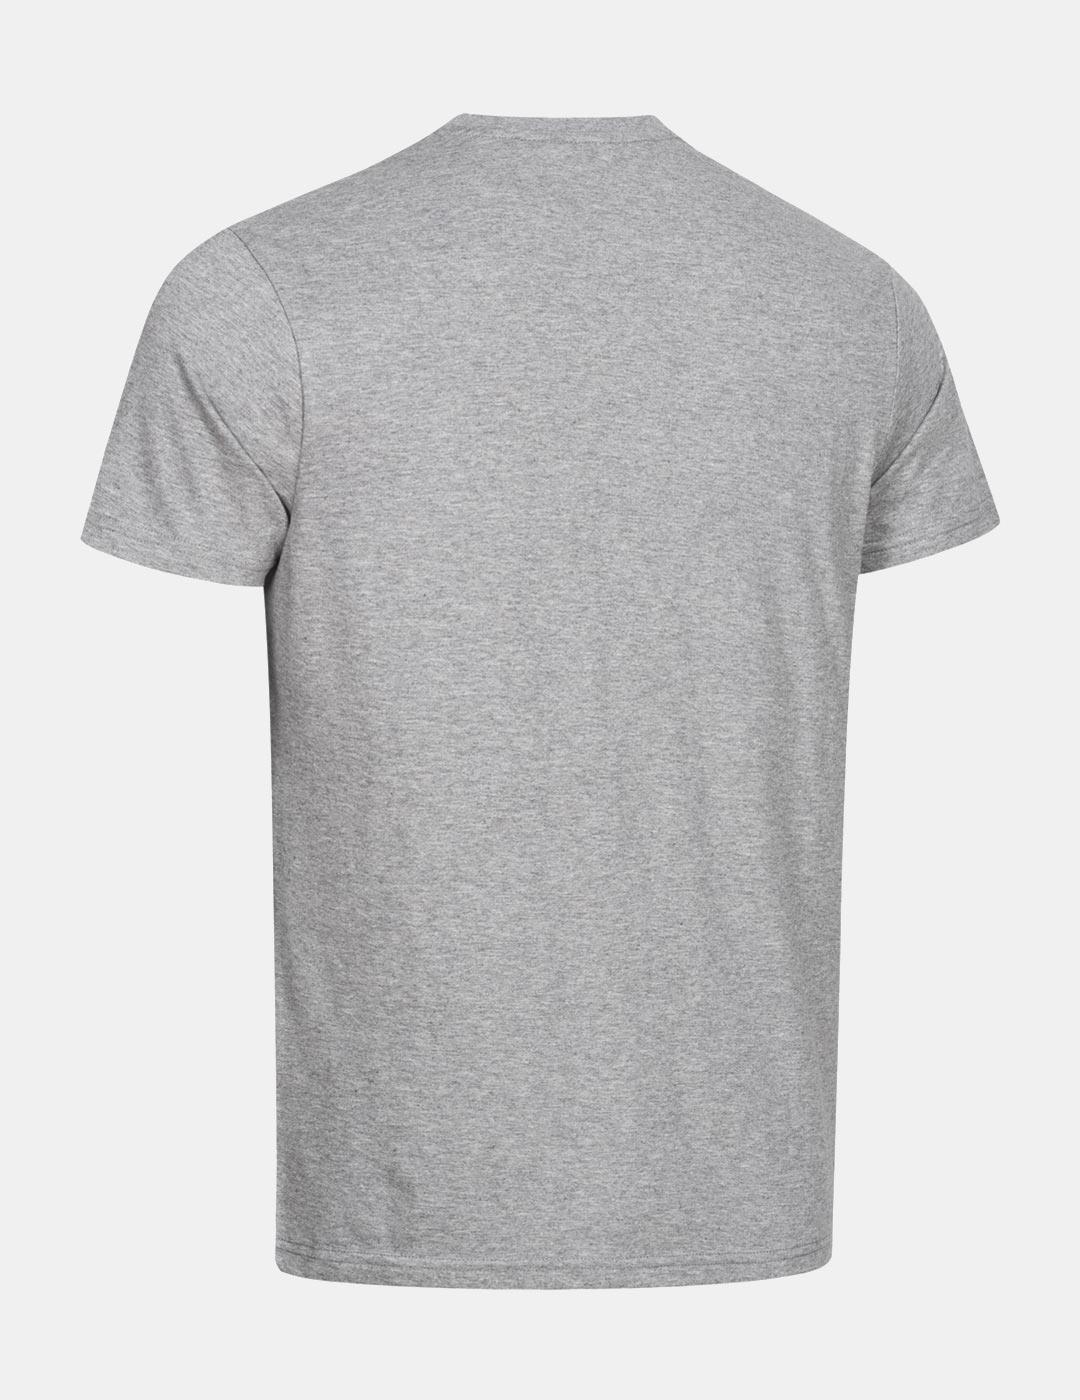 Camiseta LONSDALE HOLYROOD - Marl Grey/Black